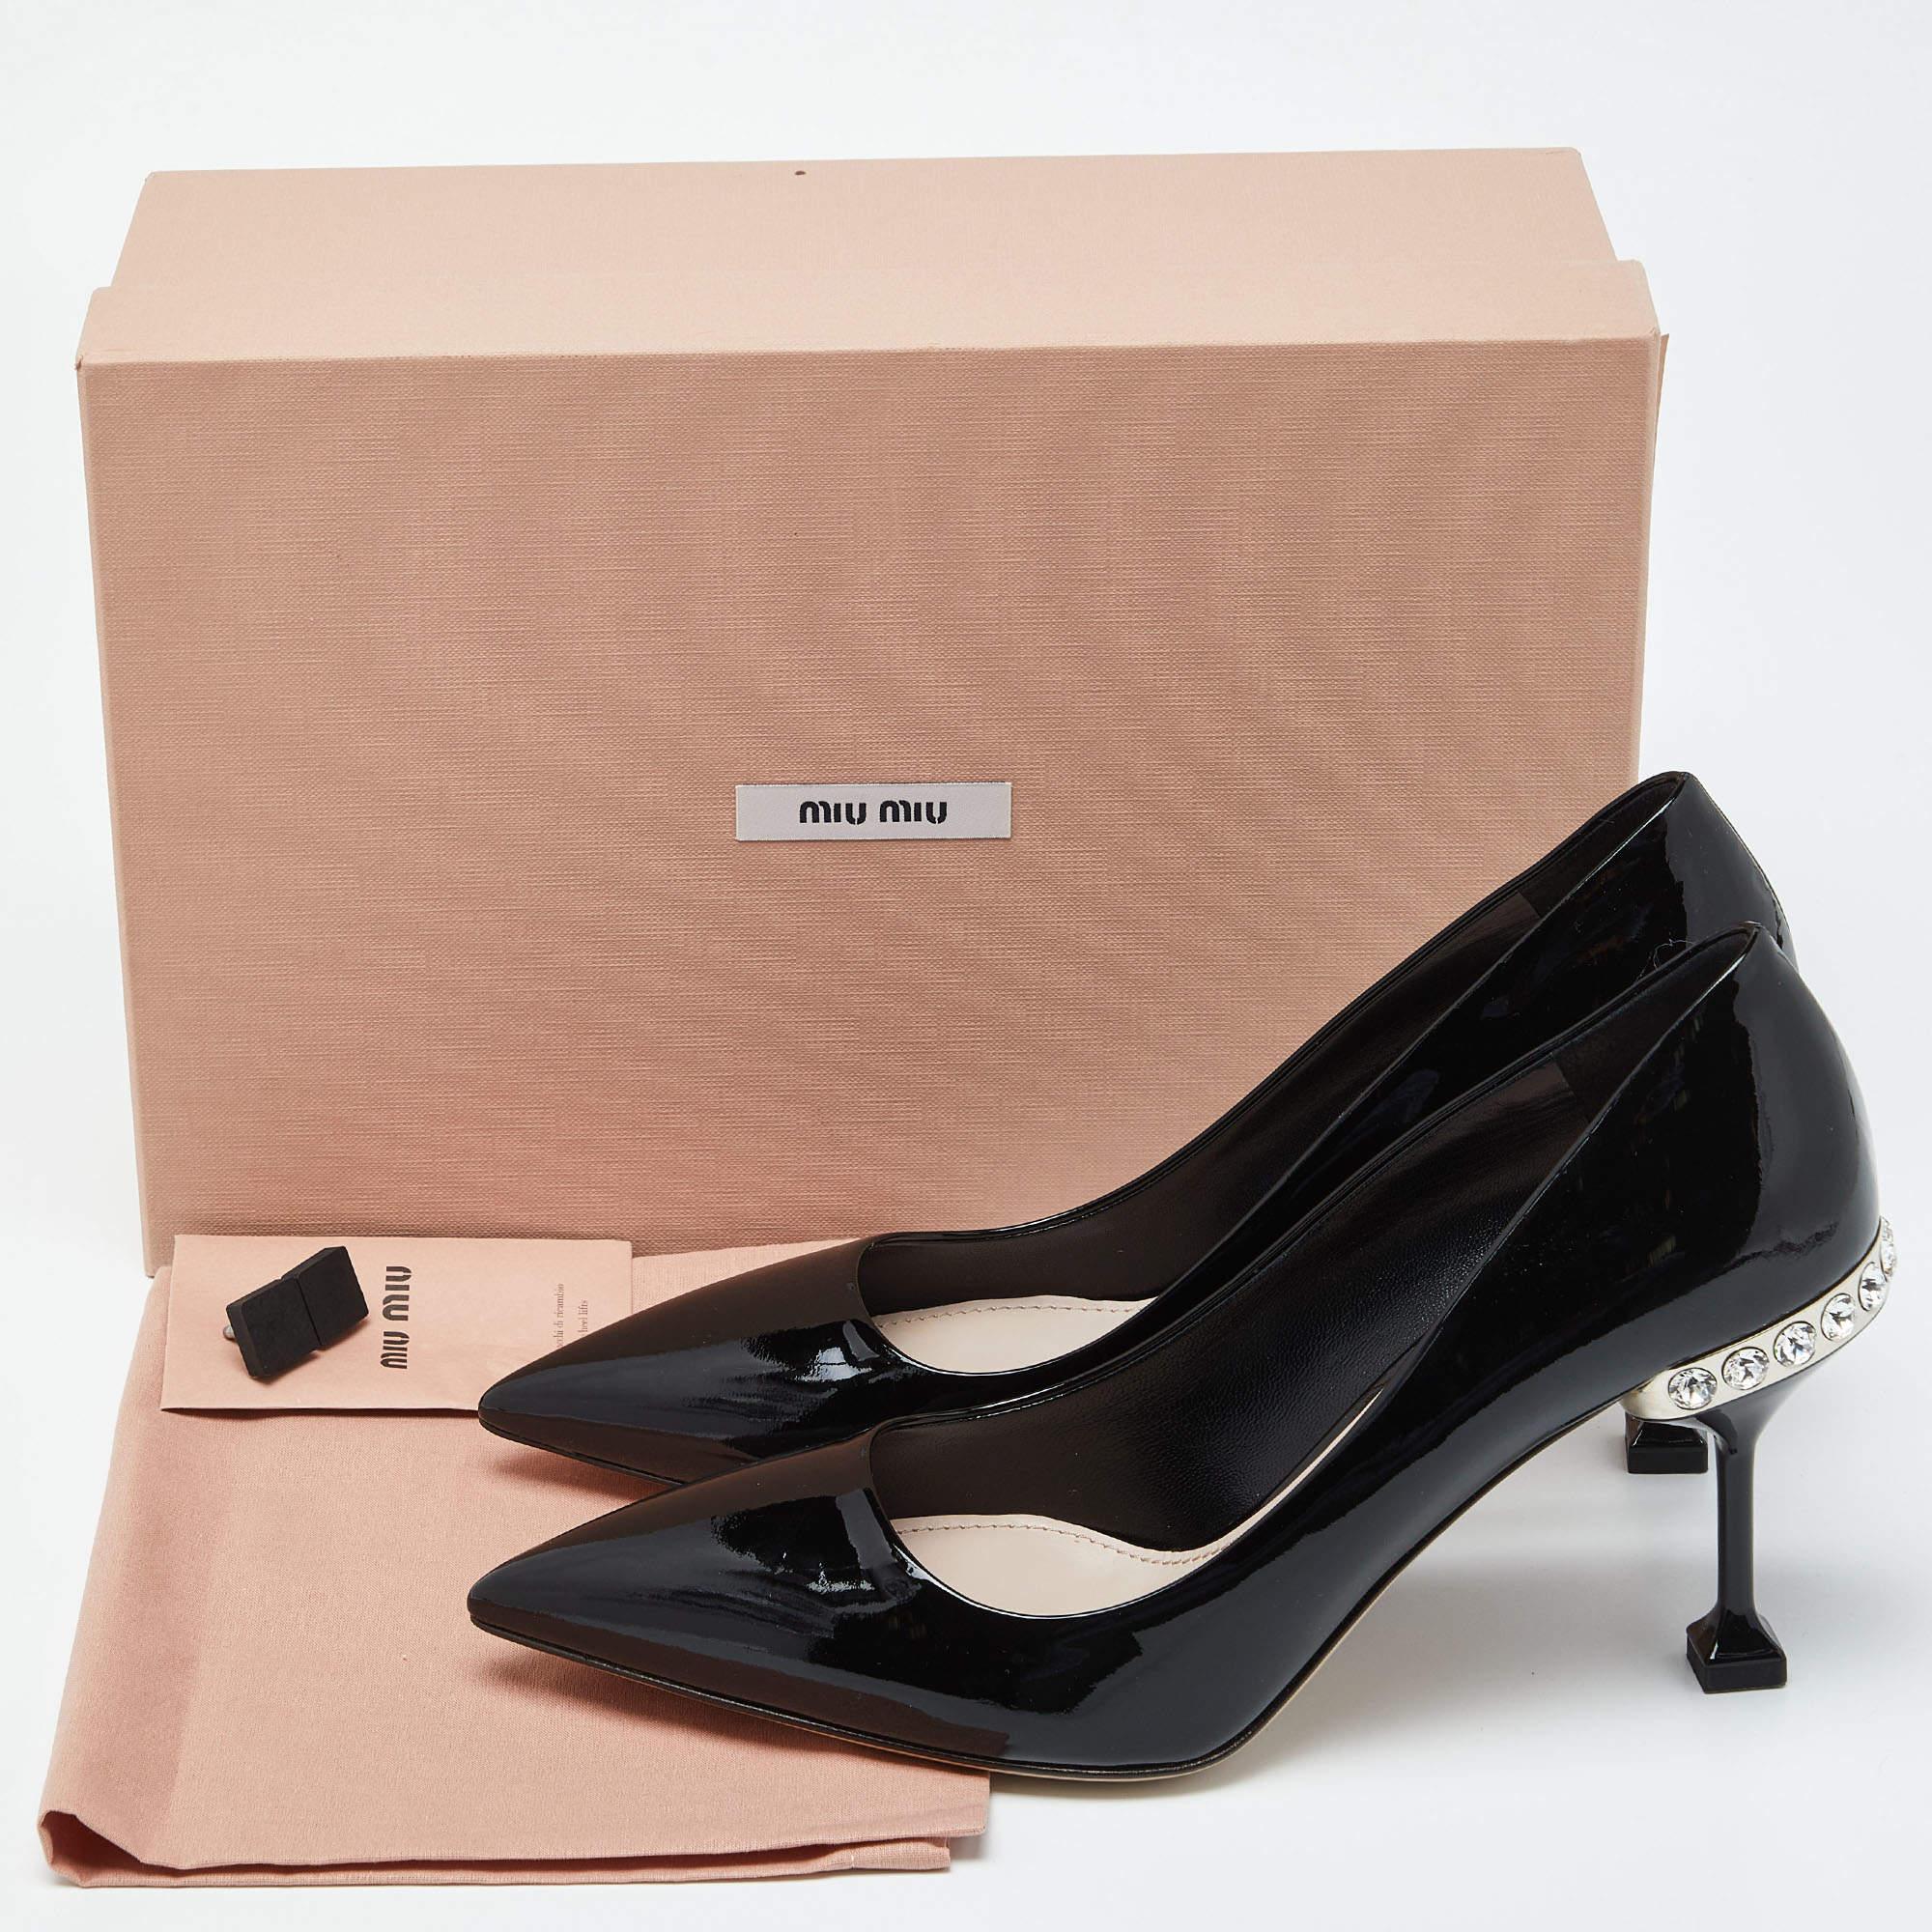 Miu Miu Black Patent Leather Pointed Toe Kitten Heel Pumps Size 38.5 5